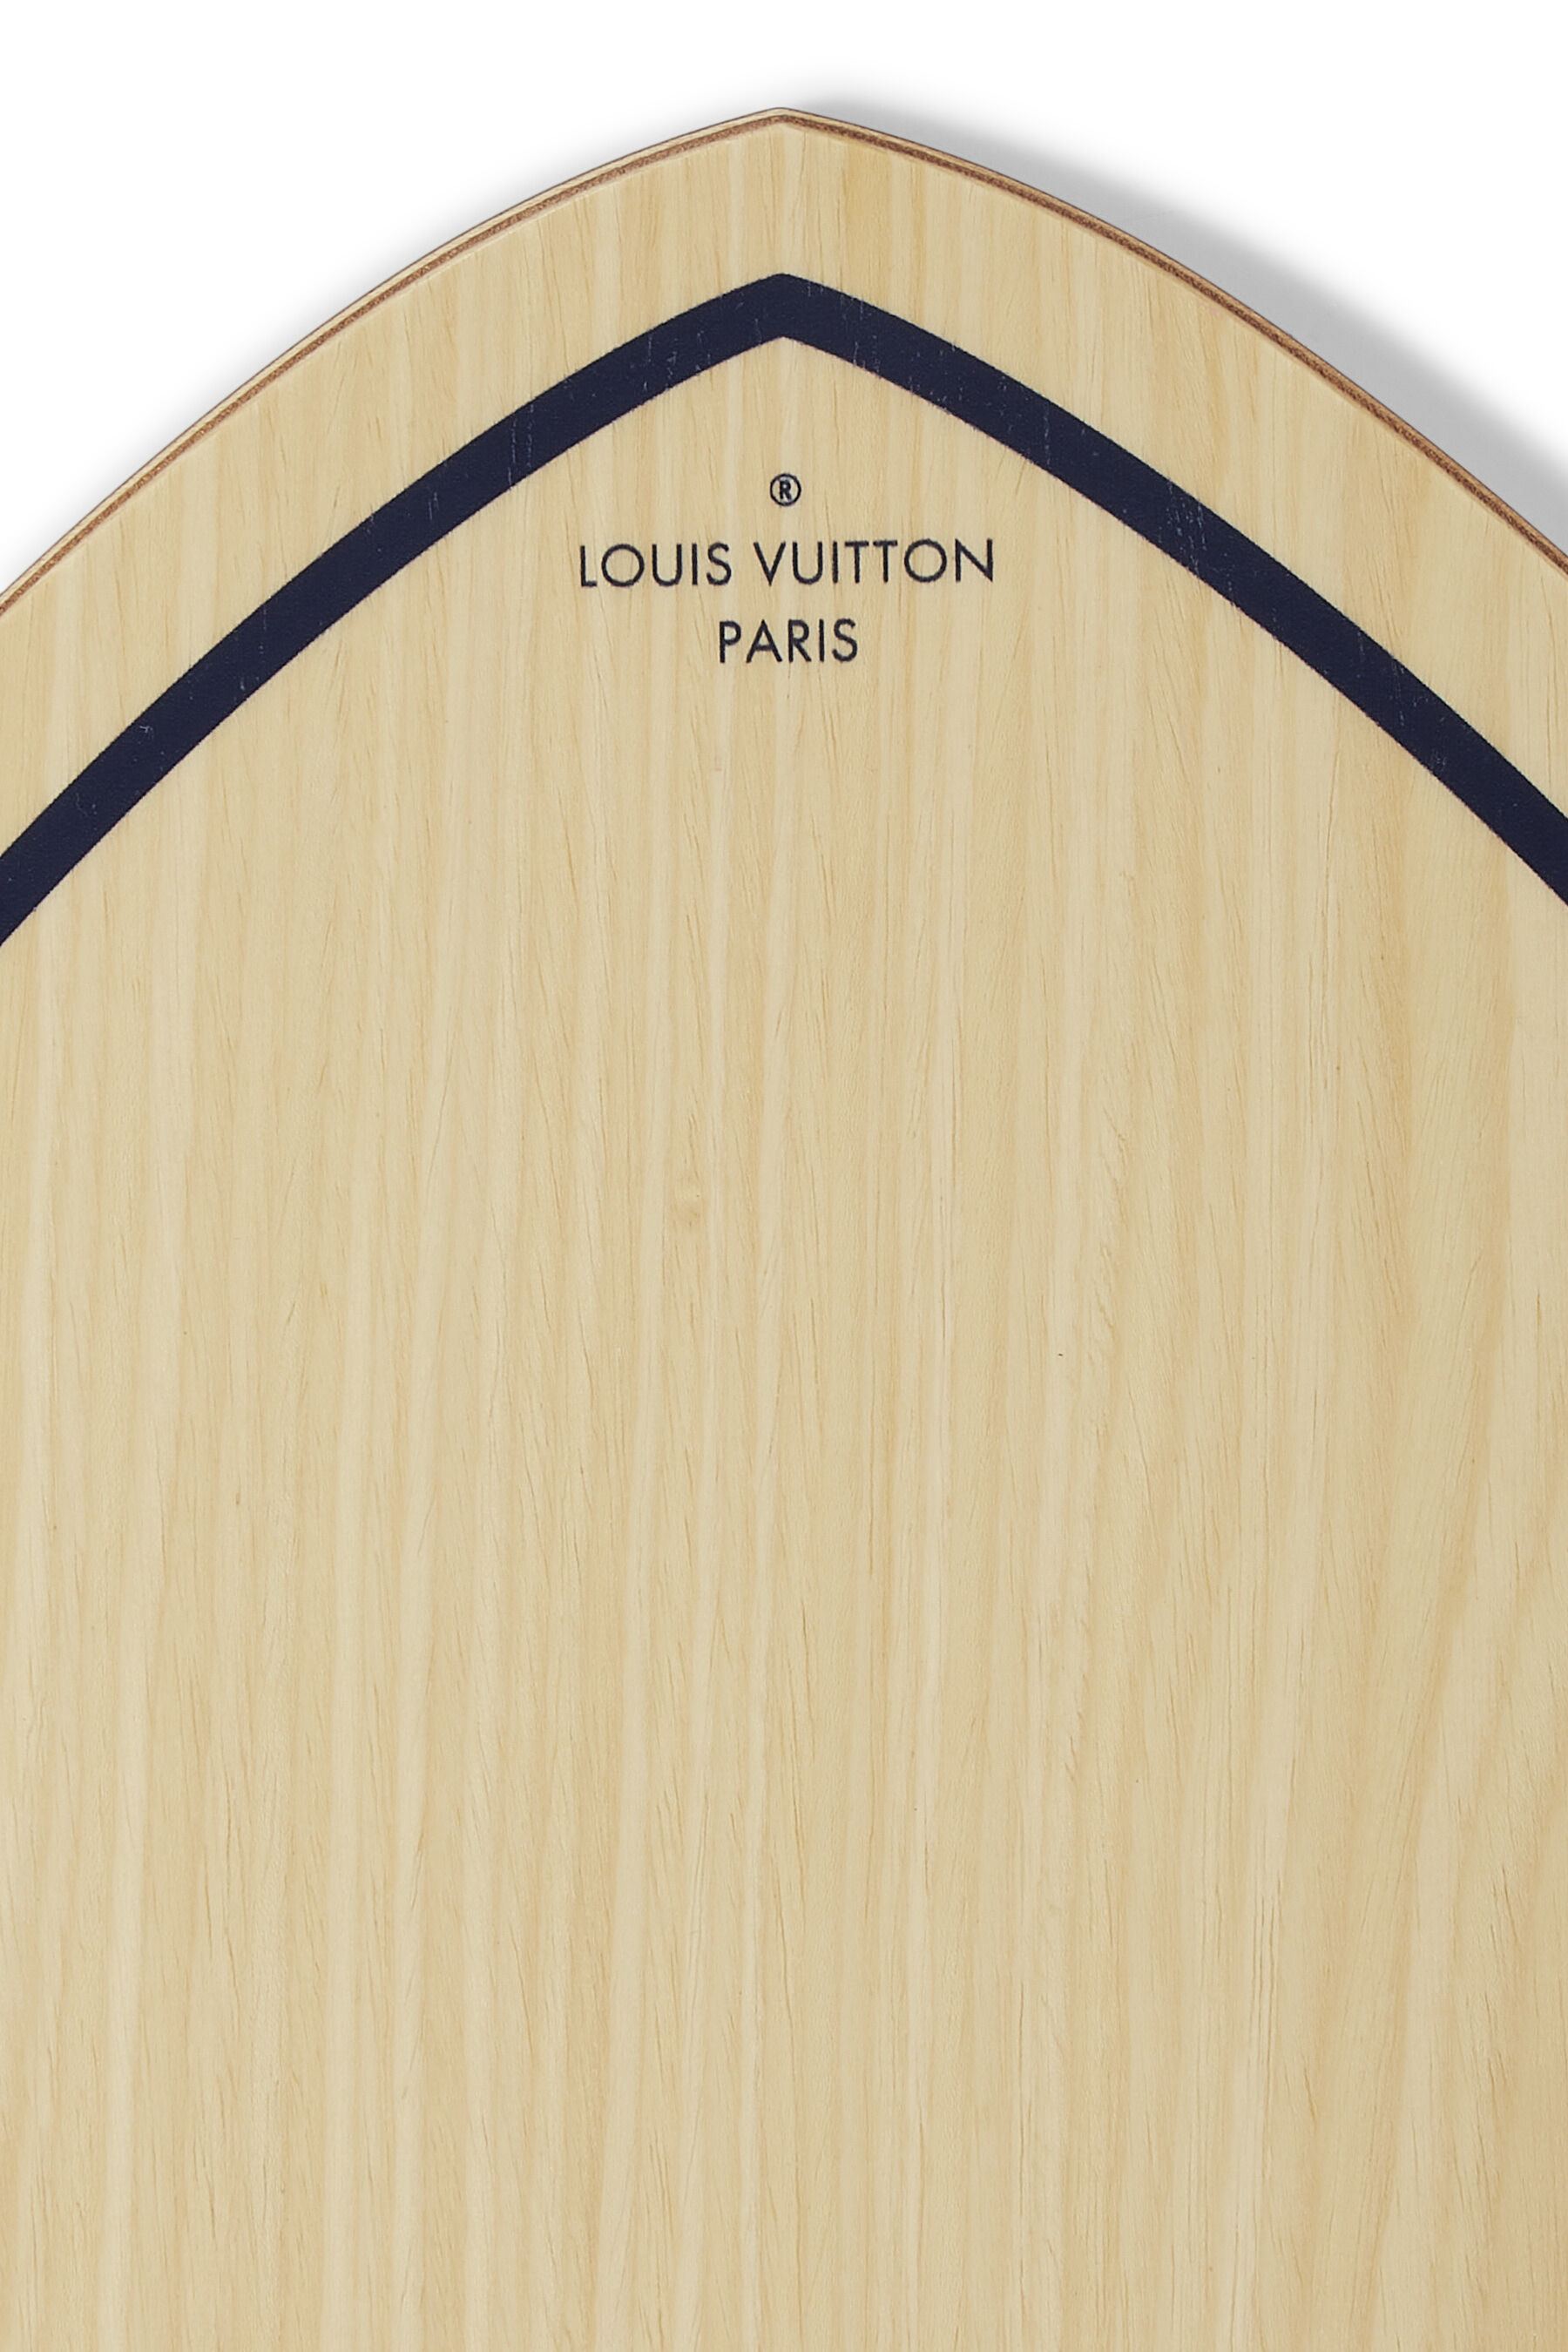 Louis Vuitton Blue Monogram Bandana Wood Escale Skimboard